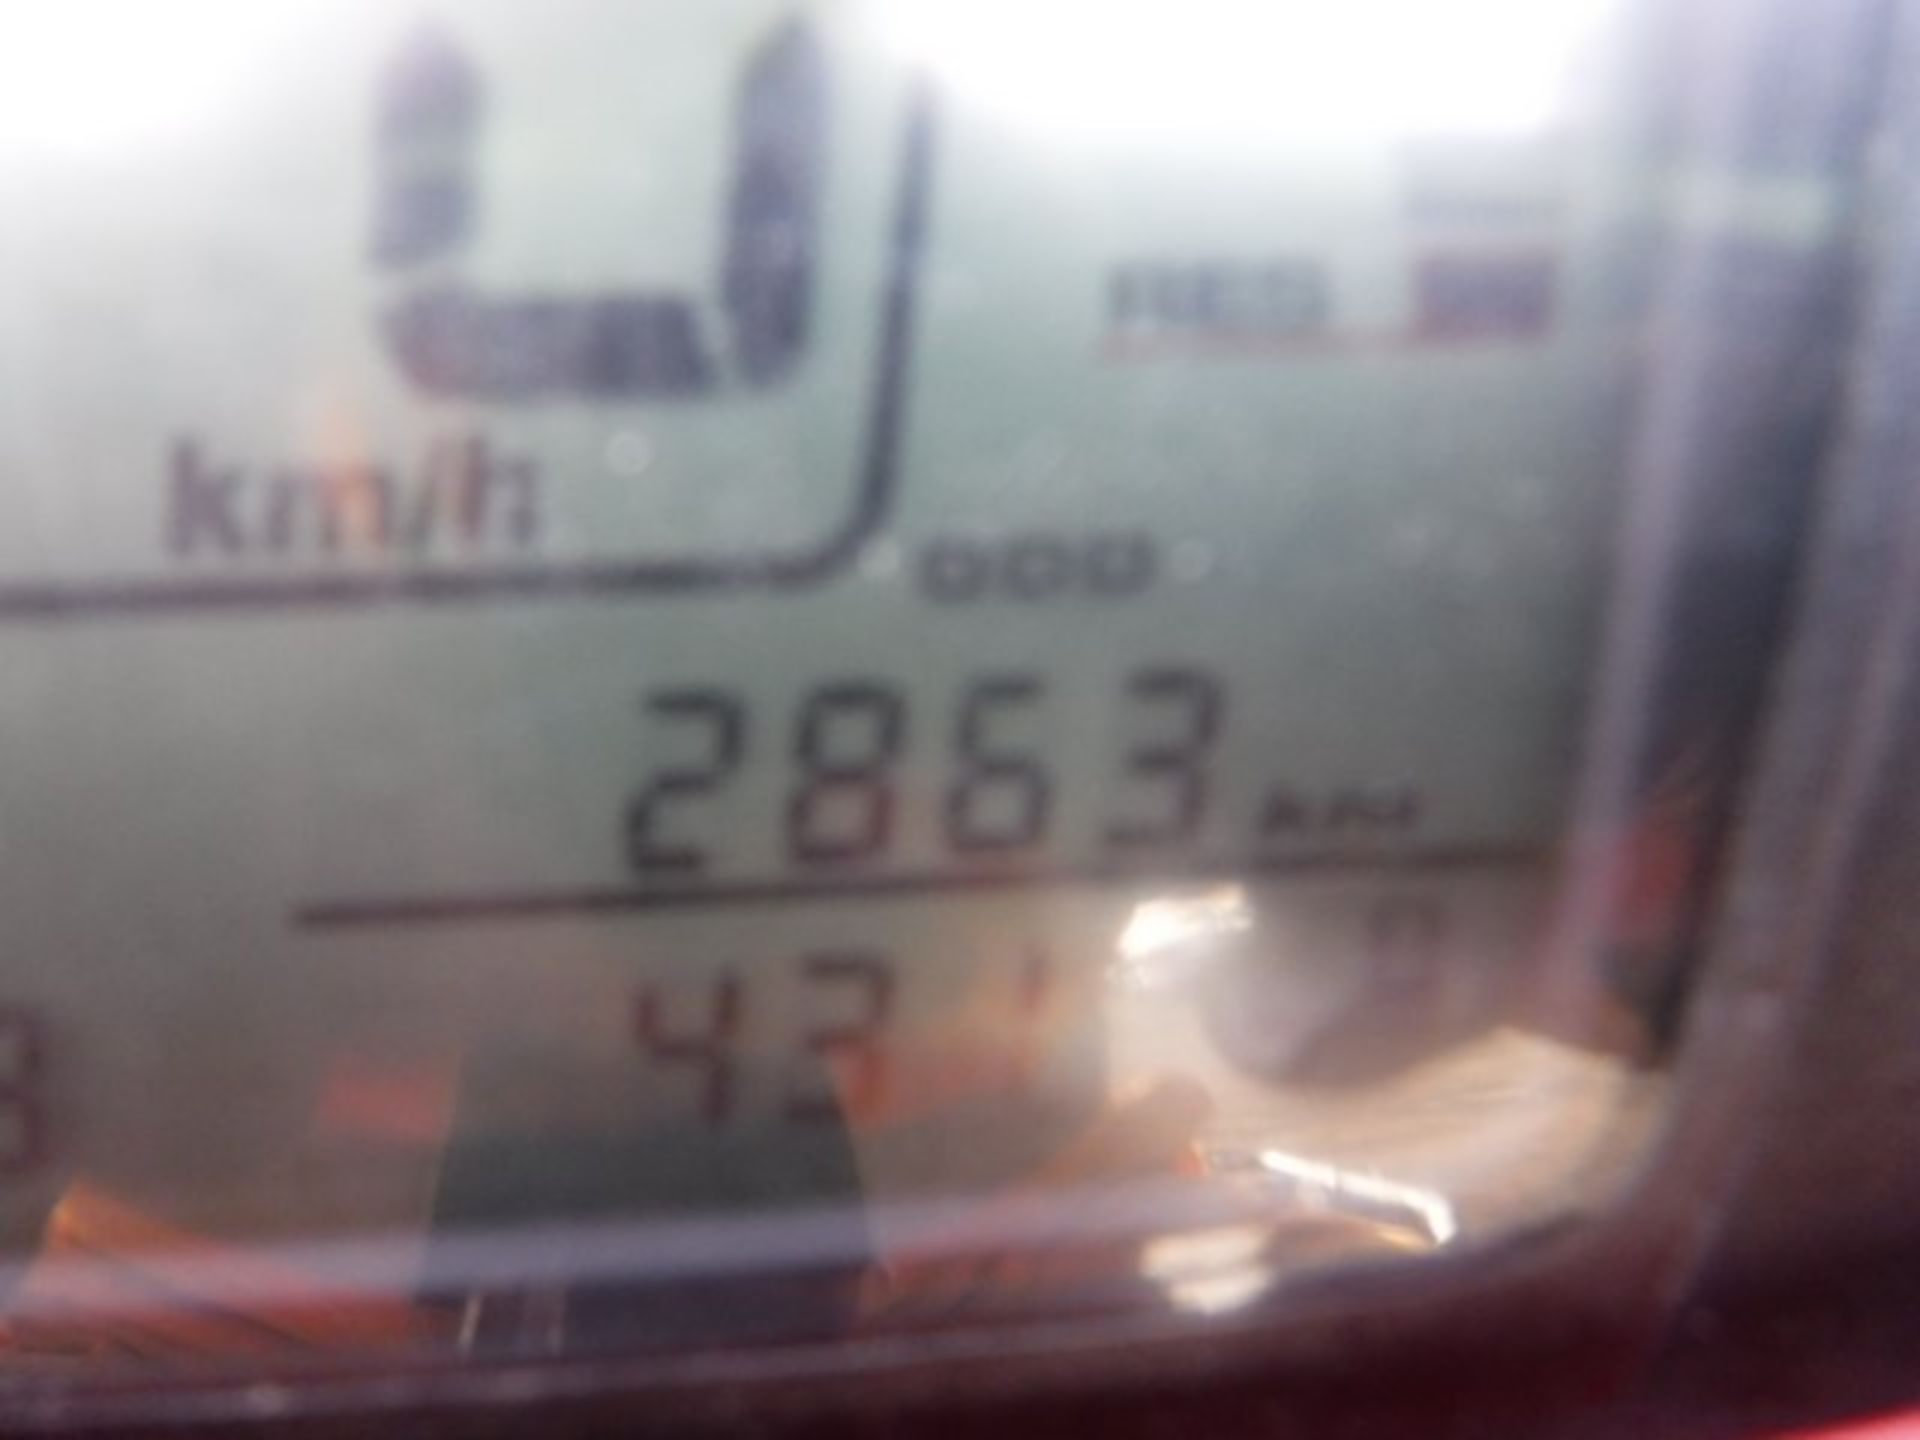 HONDA QUAD TRX 500 FM6 2863km and 431 hrs (not verified) FC86486 - Image 6 of 6